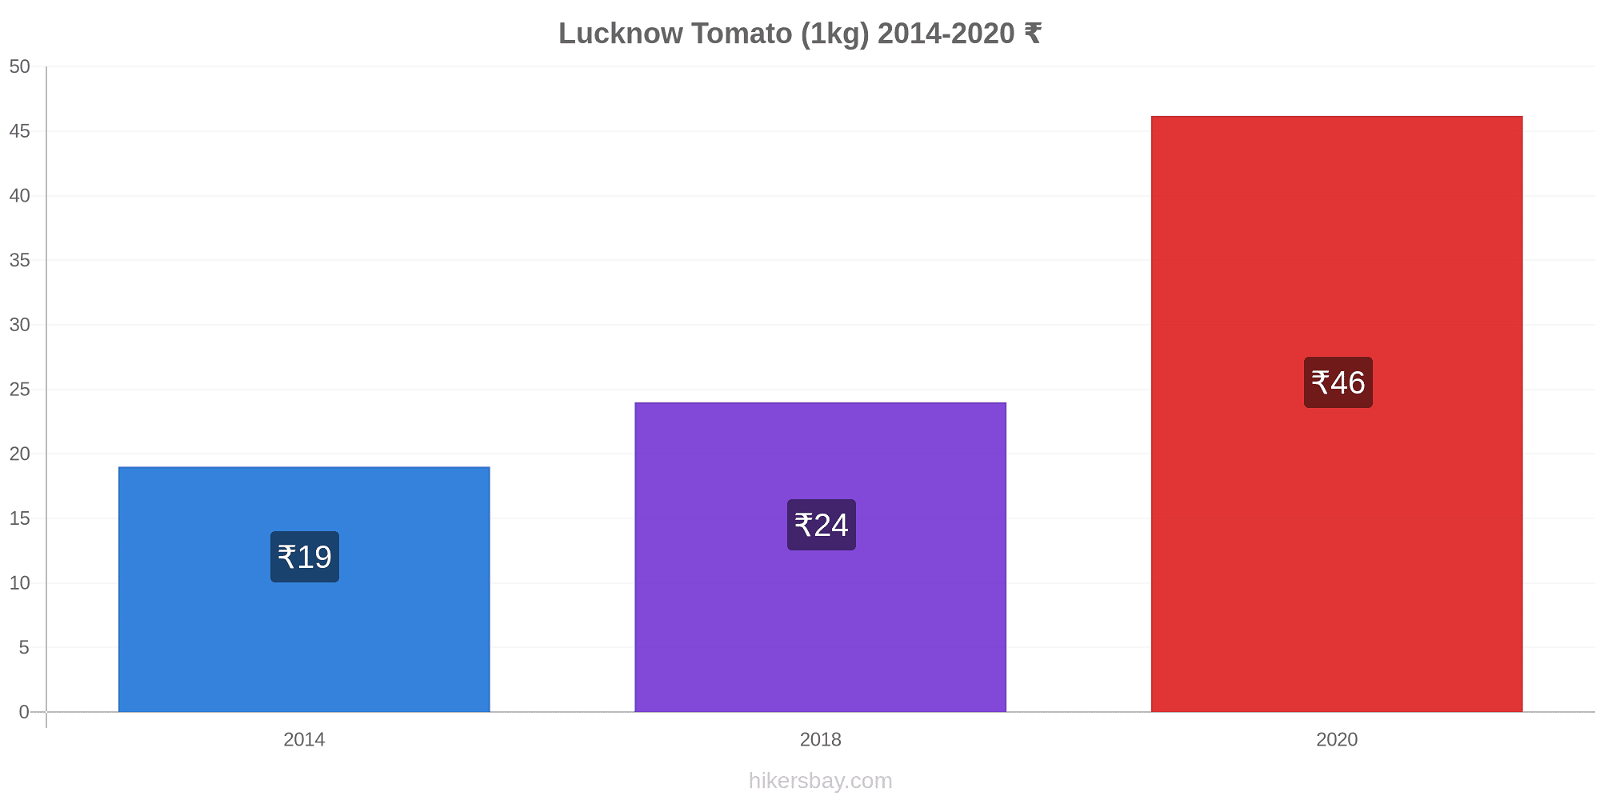 Lucknow price changes Tomato (1kg) hikersbay.com